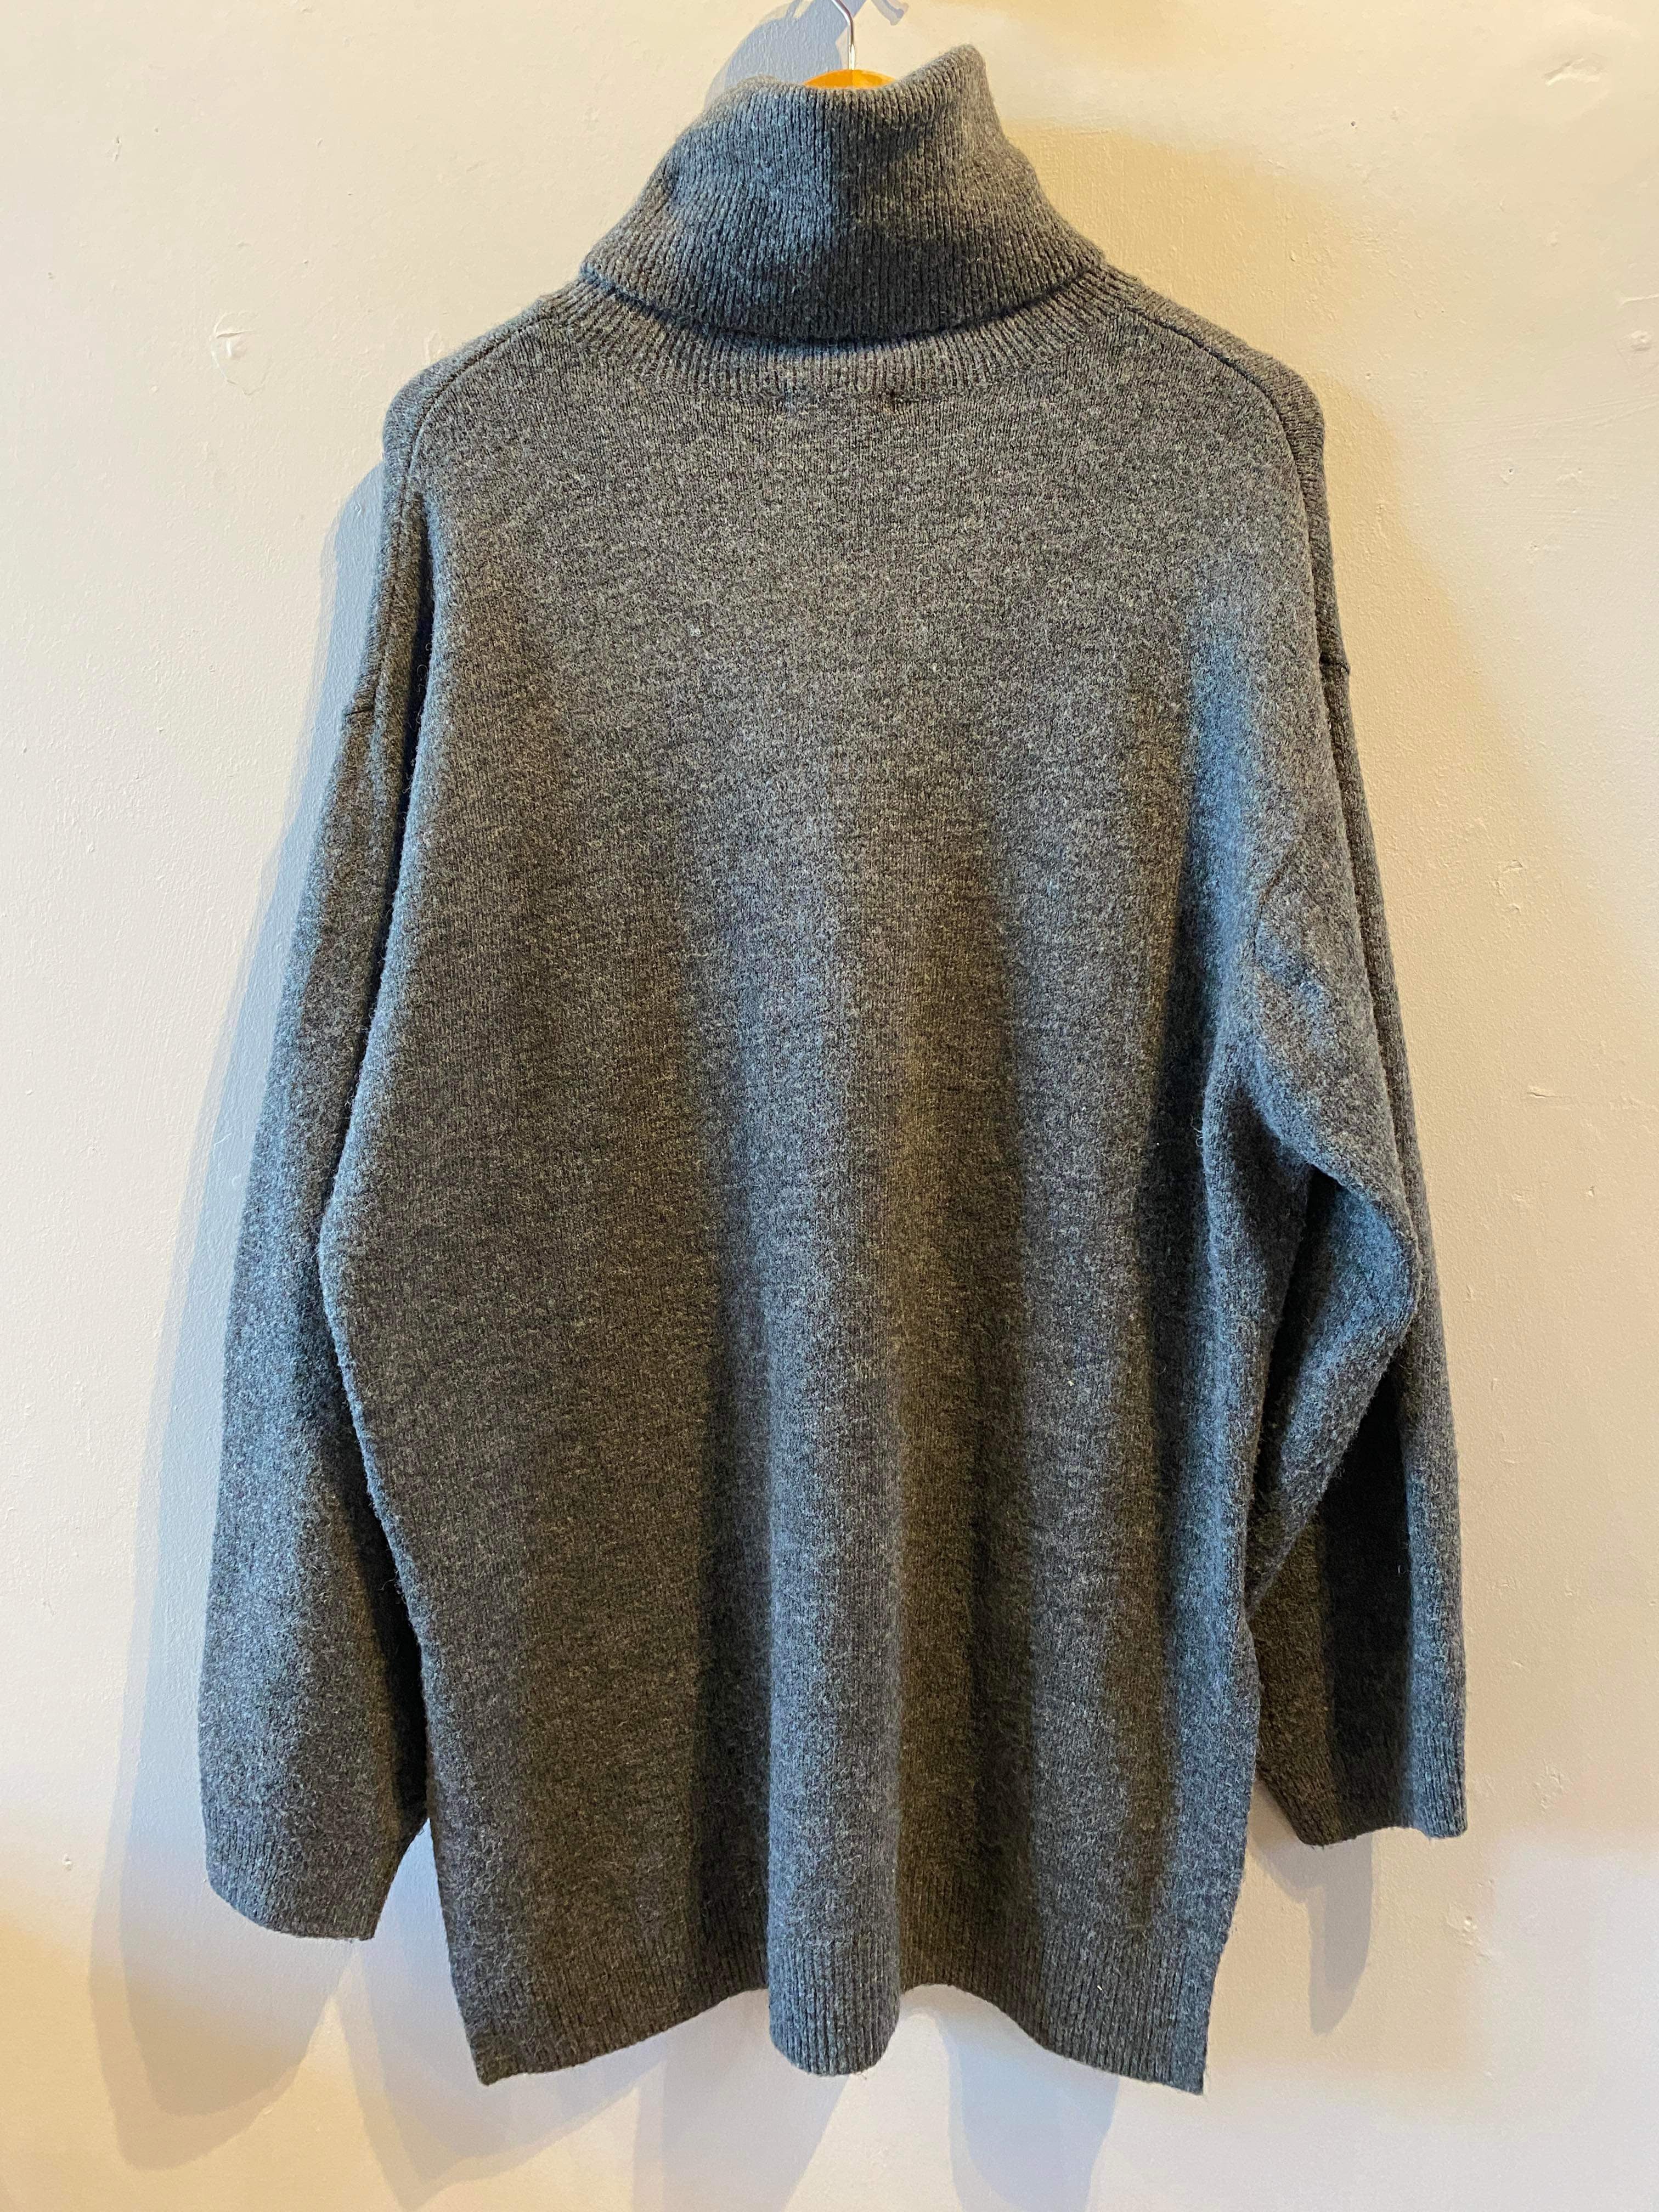 H&M - Sweater - Size: M